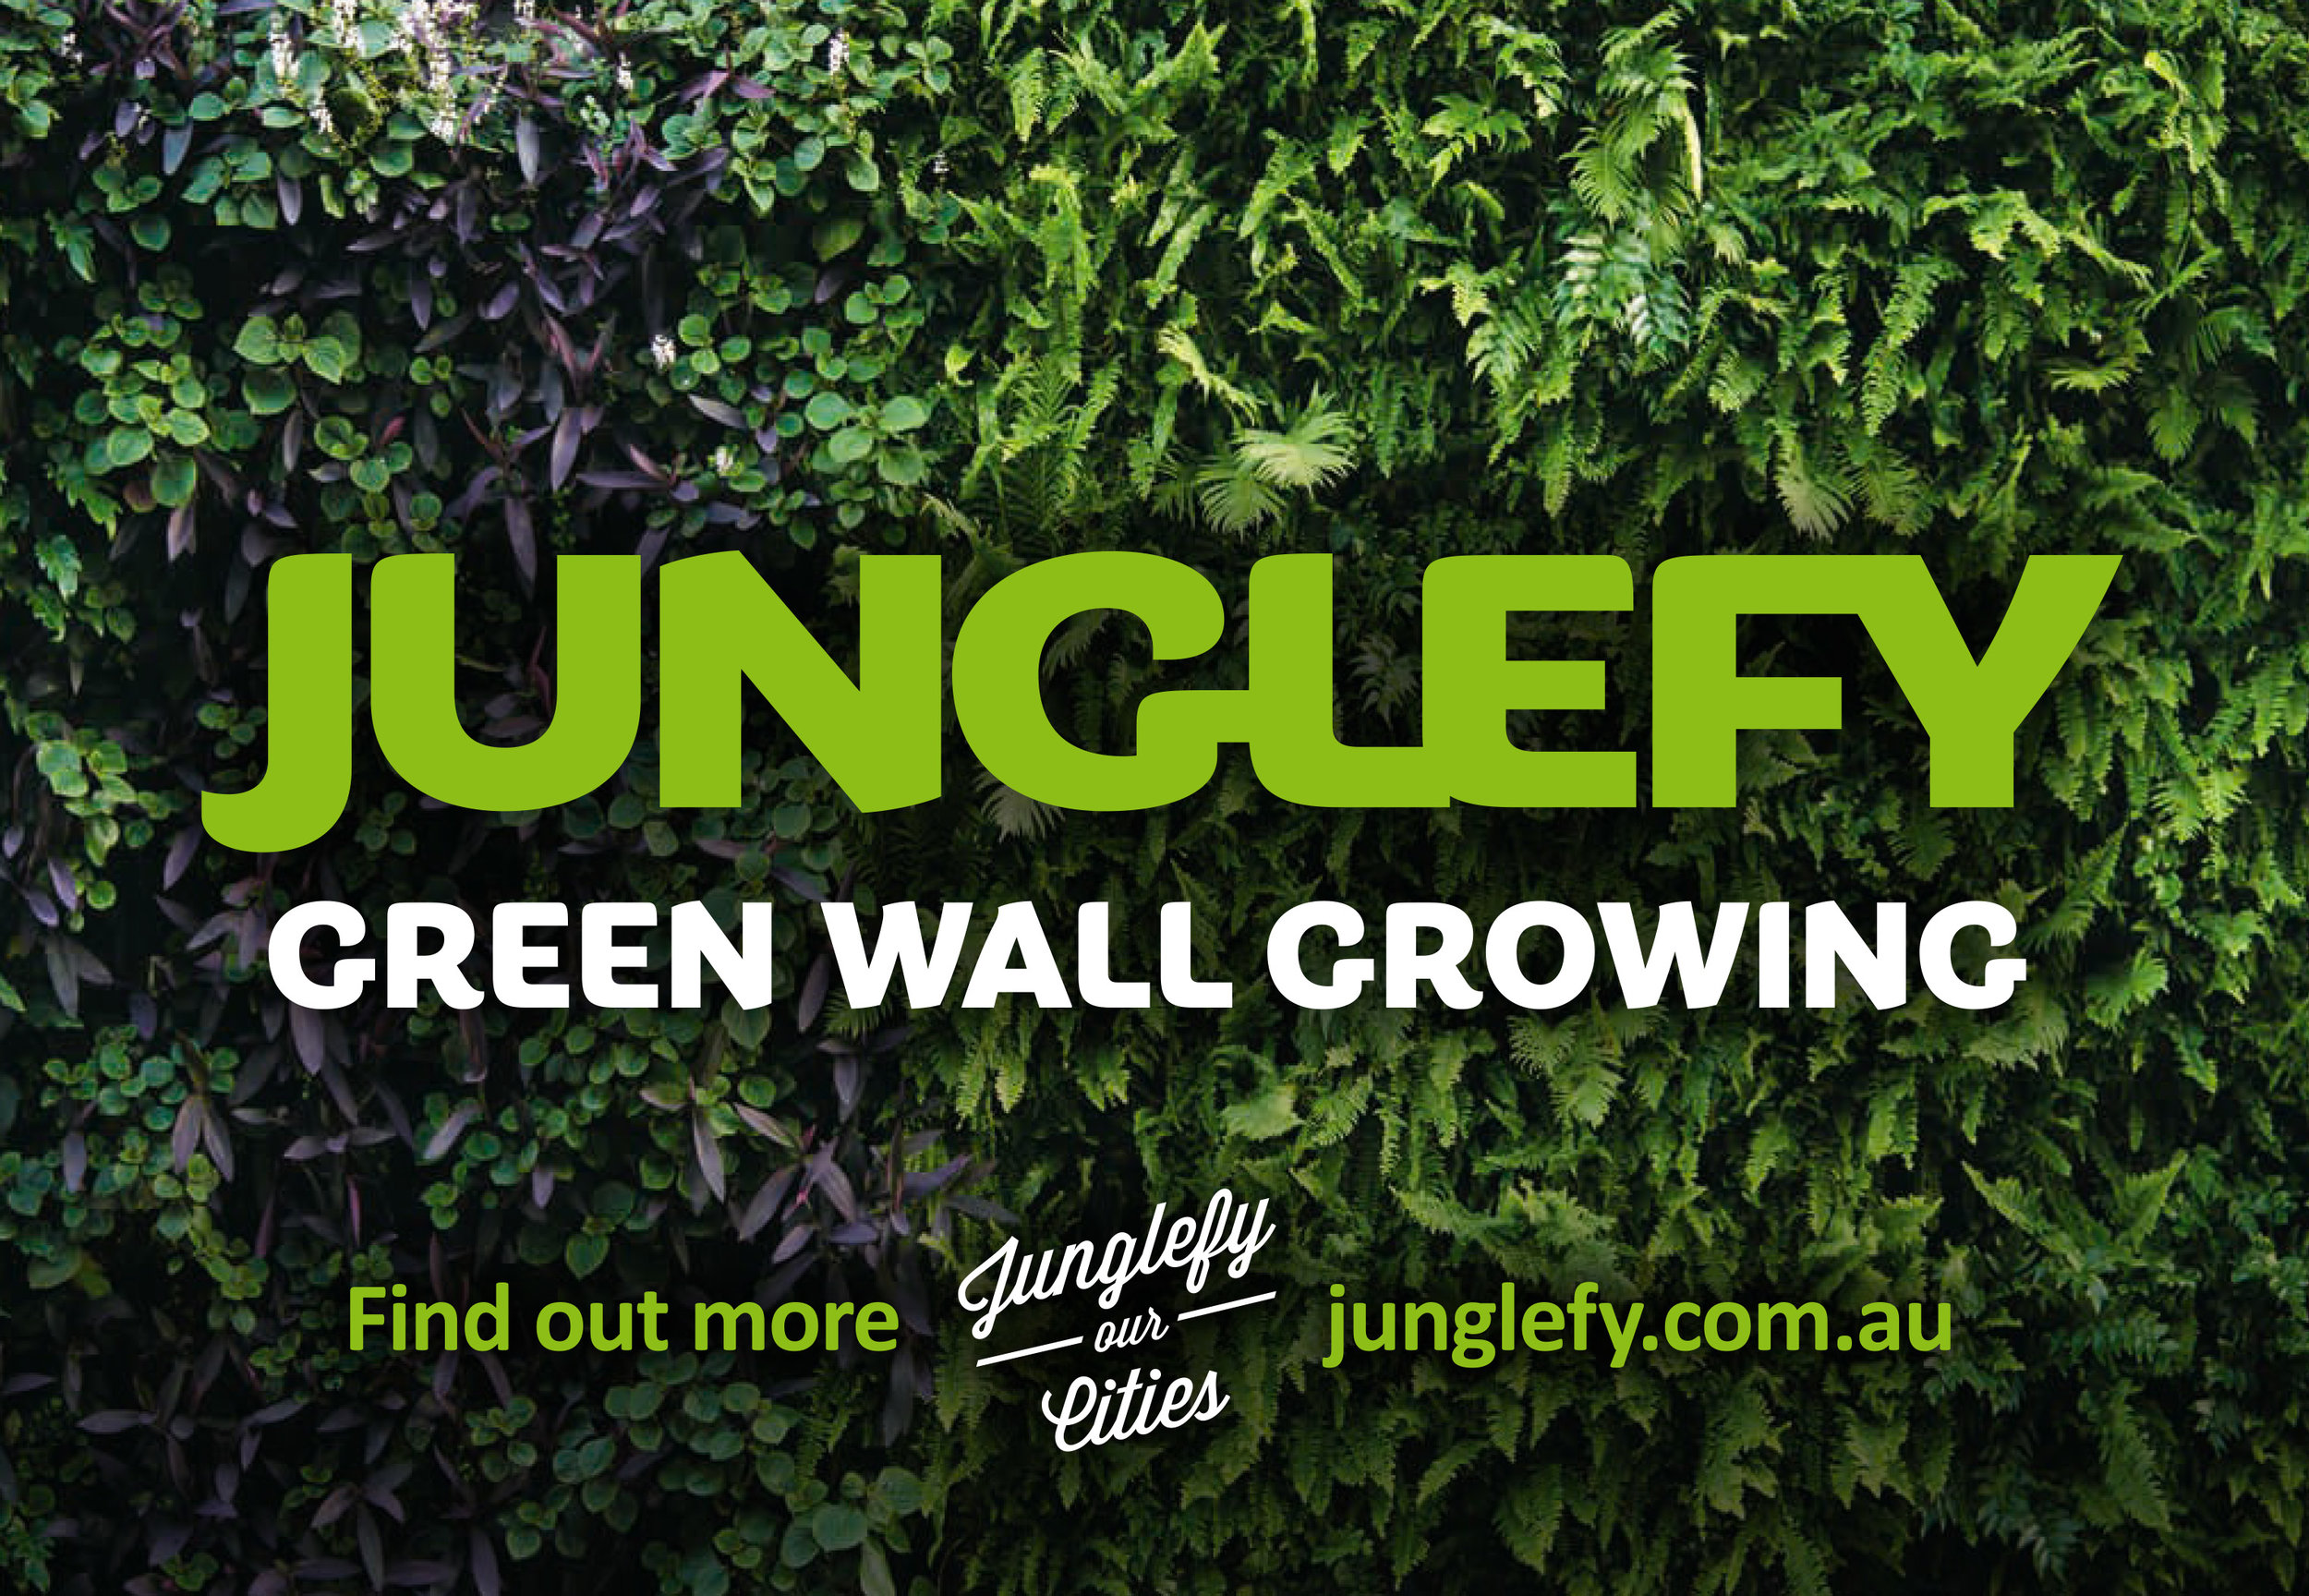 Sign - for Junglefy (via Tin Shed Marketing)